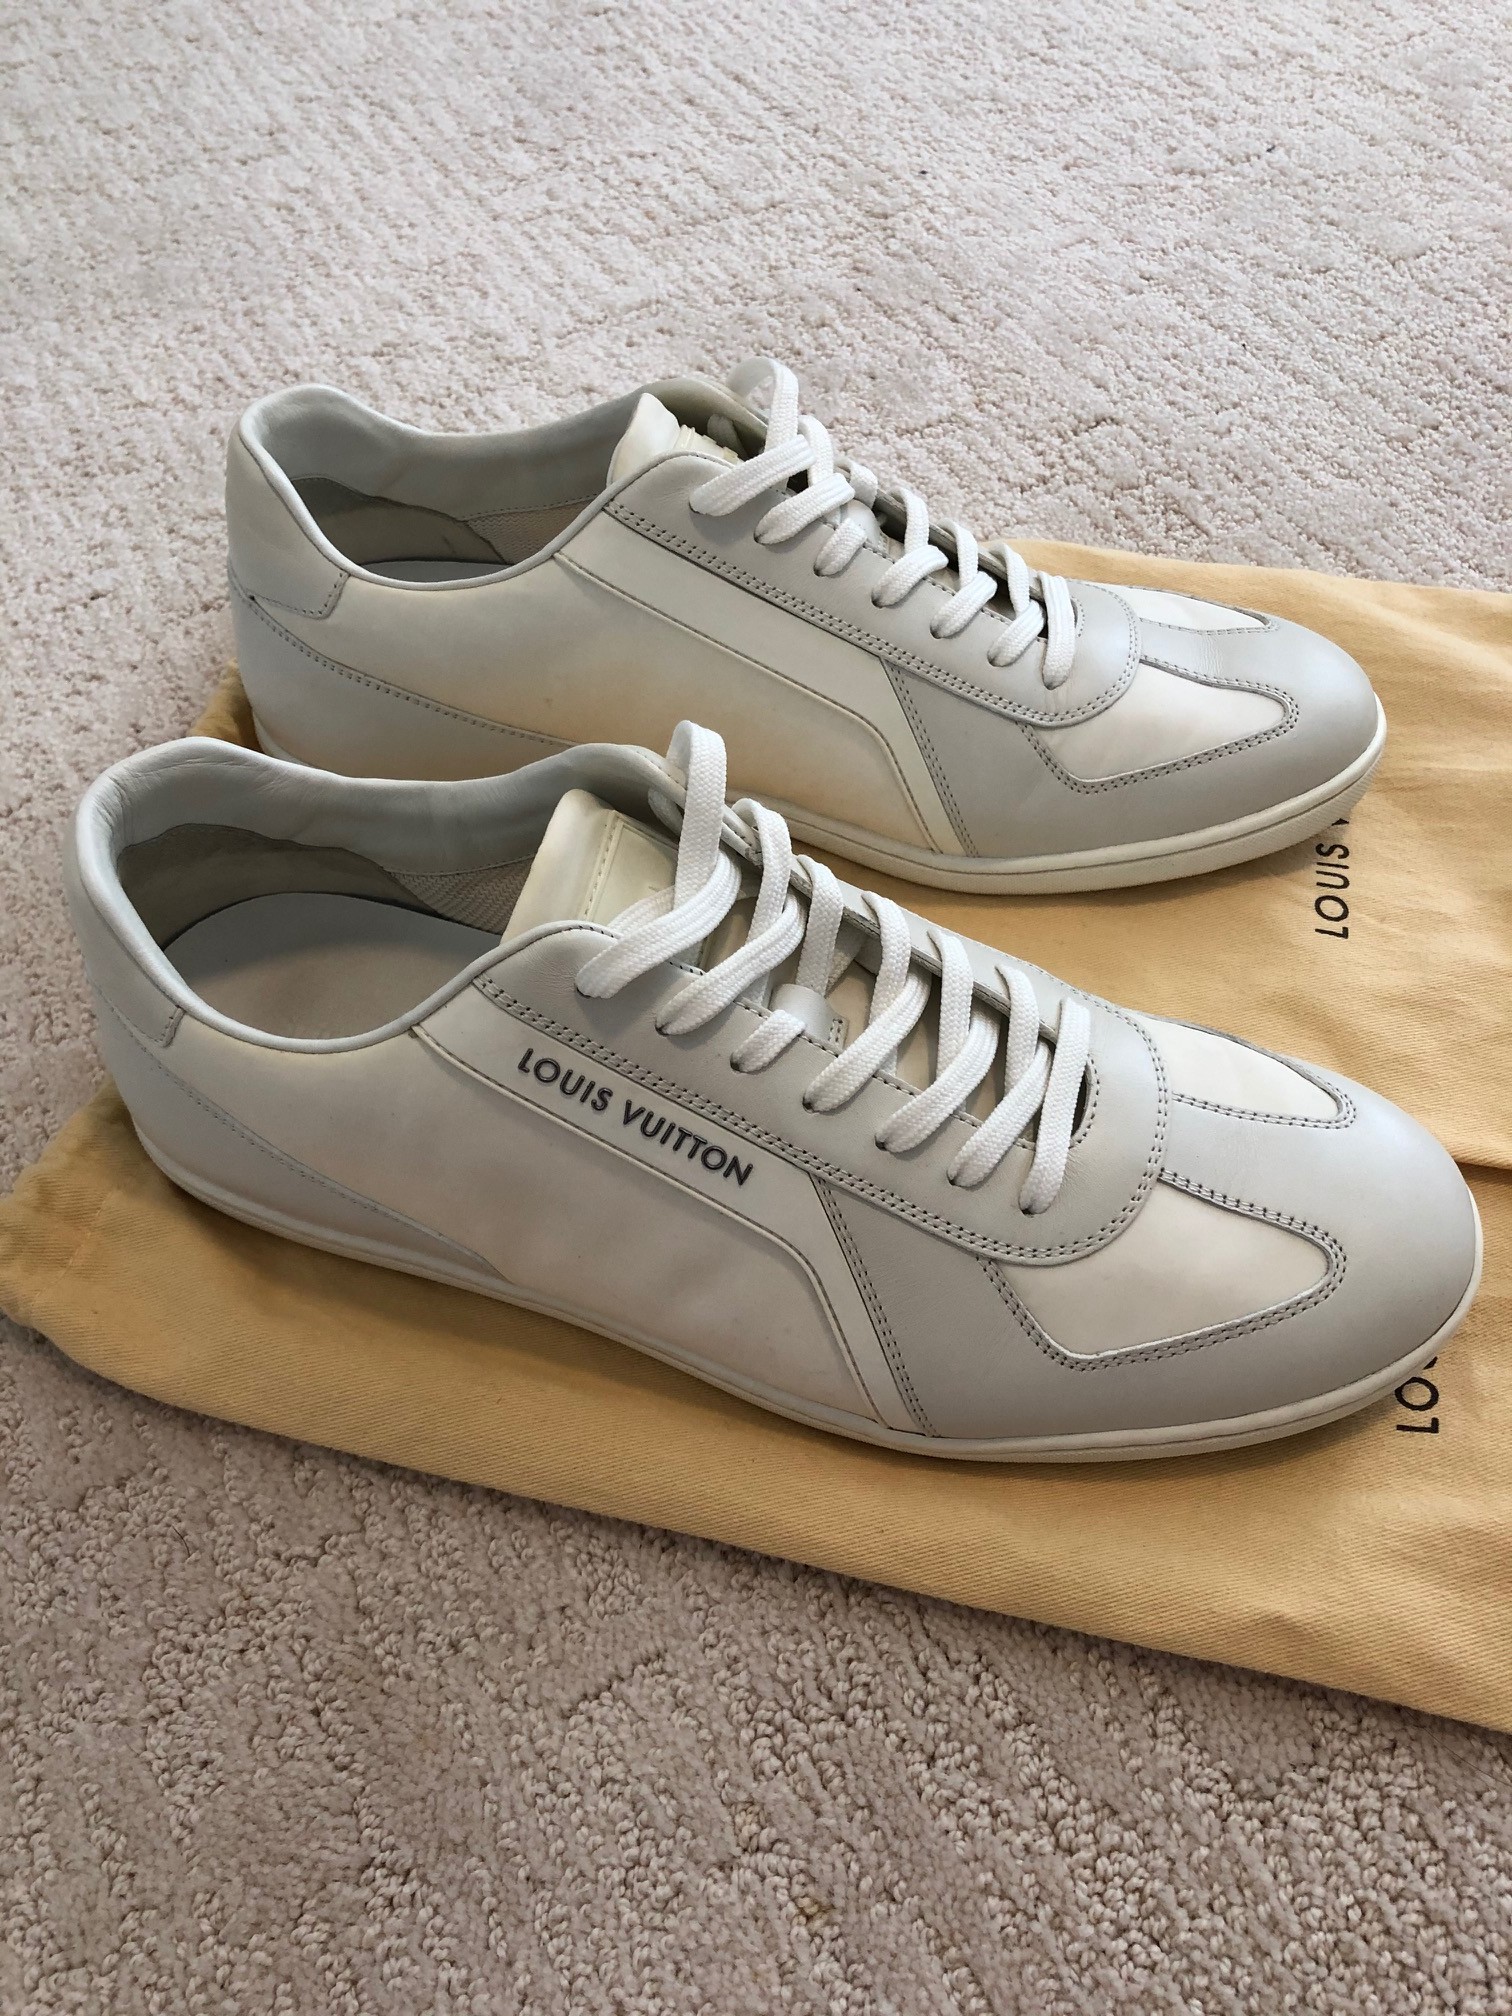 $800 Men's Louis Vuitton White Leather Sneaker Trainers SZ LV 7.5